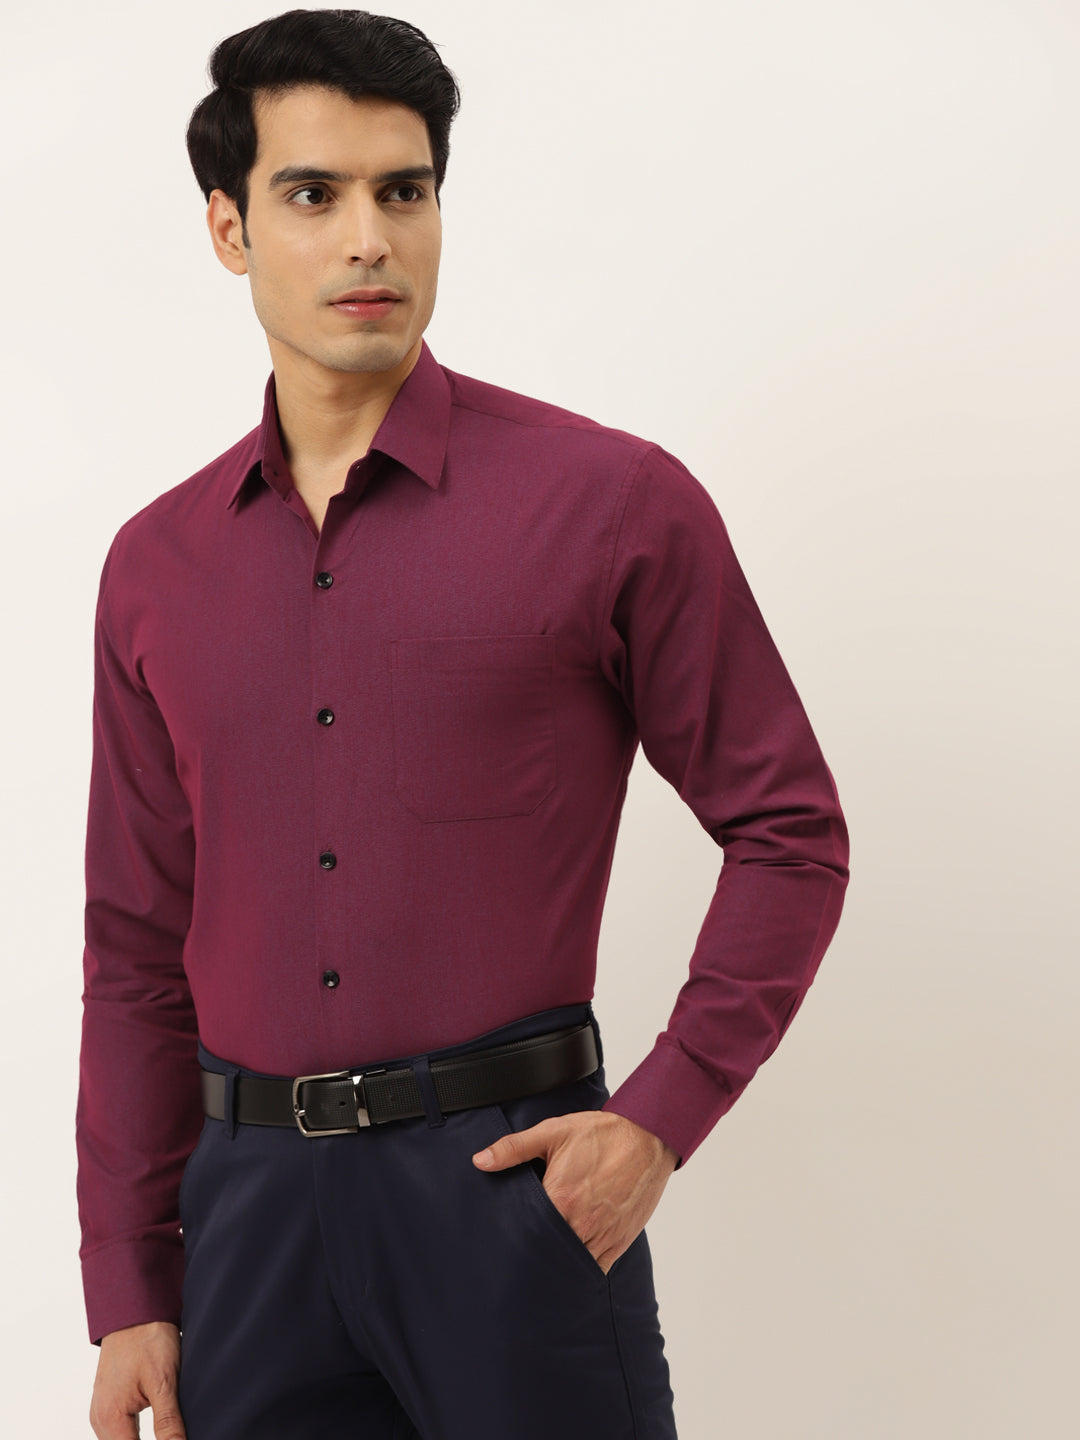 Jainish Men's Solid Formal Cotton Shirt